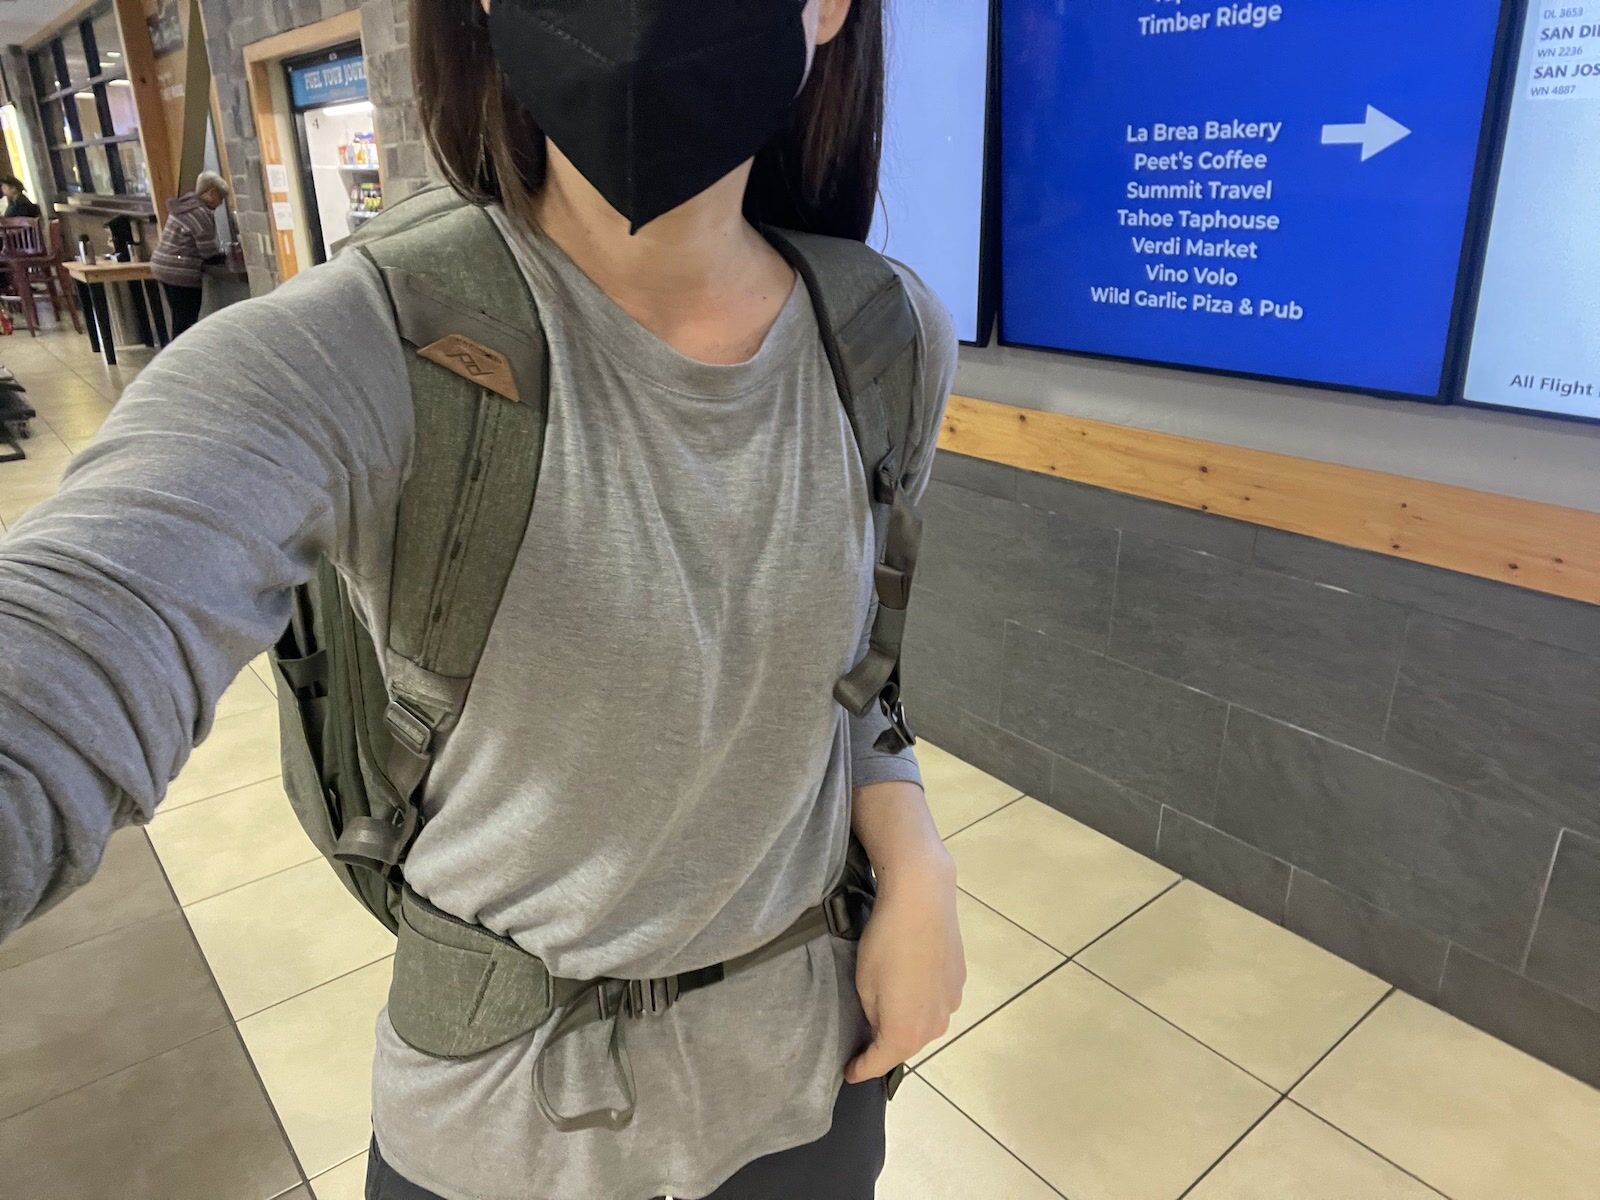 Peak designs travel bacg hip pack in airport